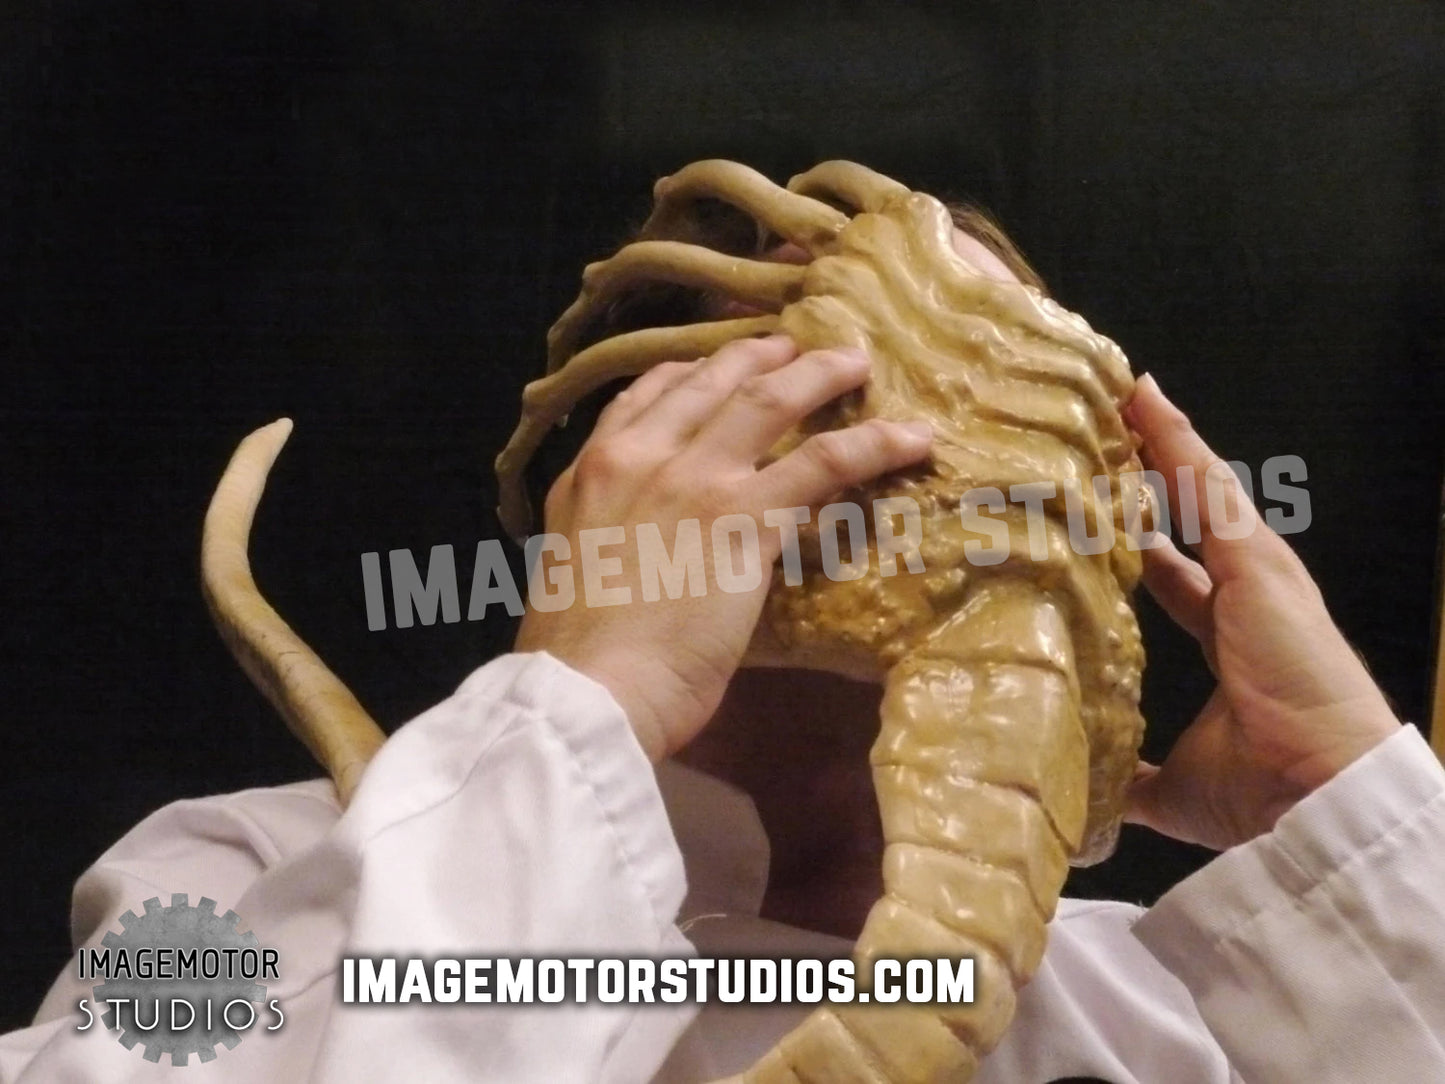 Alien facehugger prop replica Life size 1:1 scale